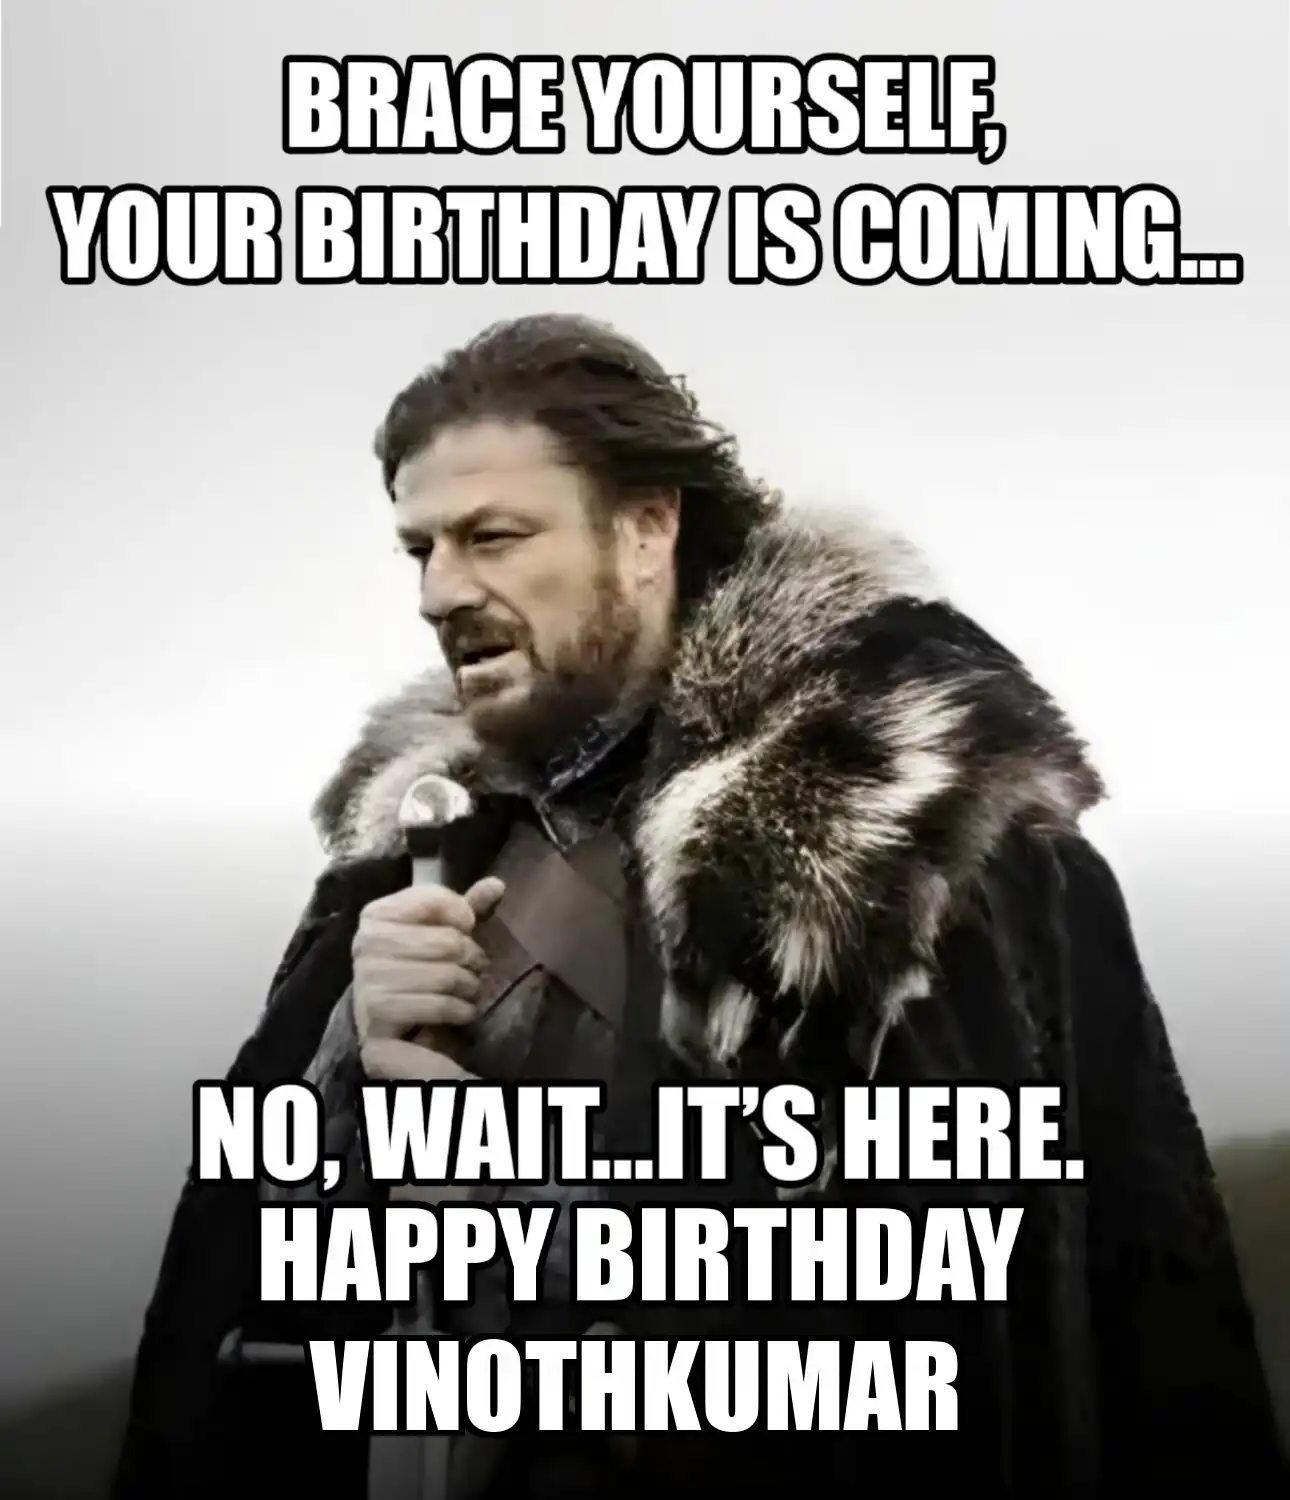 Happy Birthday Vinothkumar Brace Yourself Your Birthday Is Coming Meme